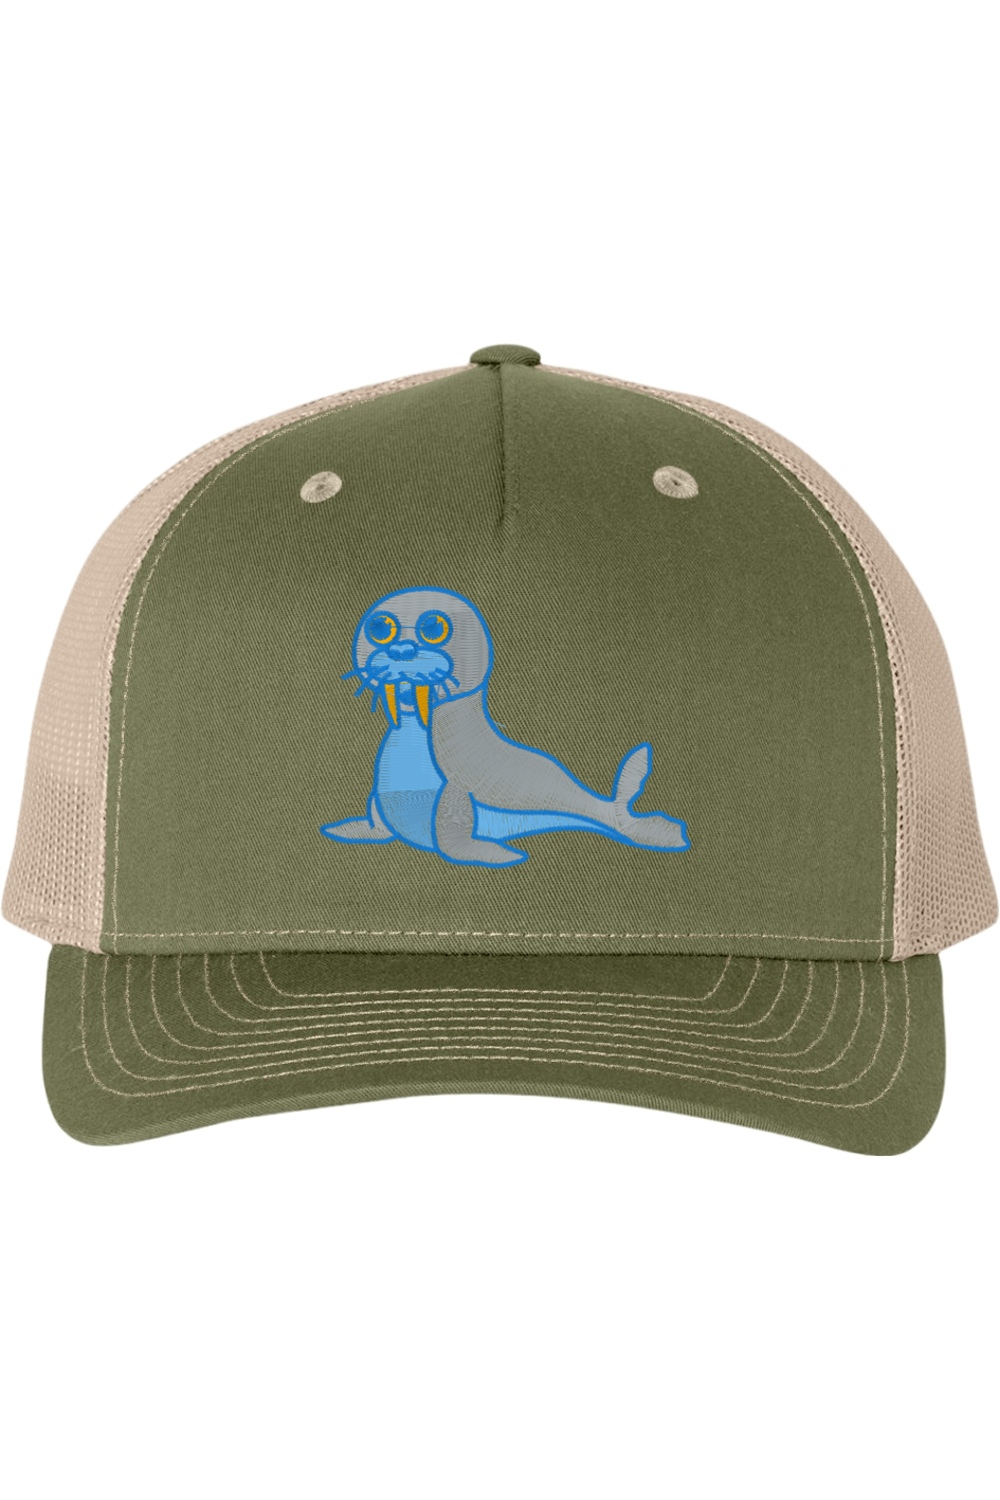 Sea Lion Embroidered Trucker Cap